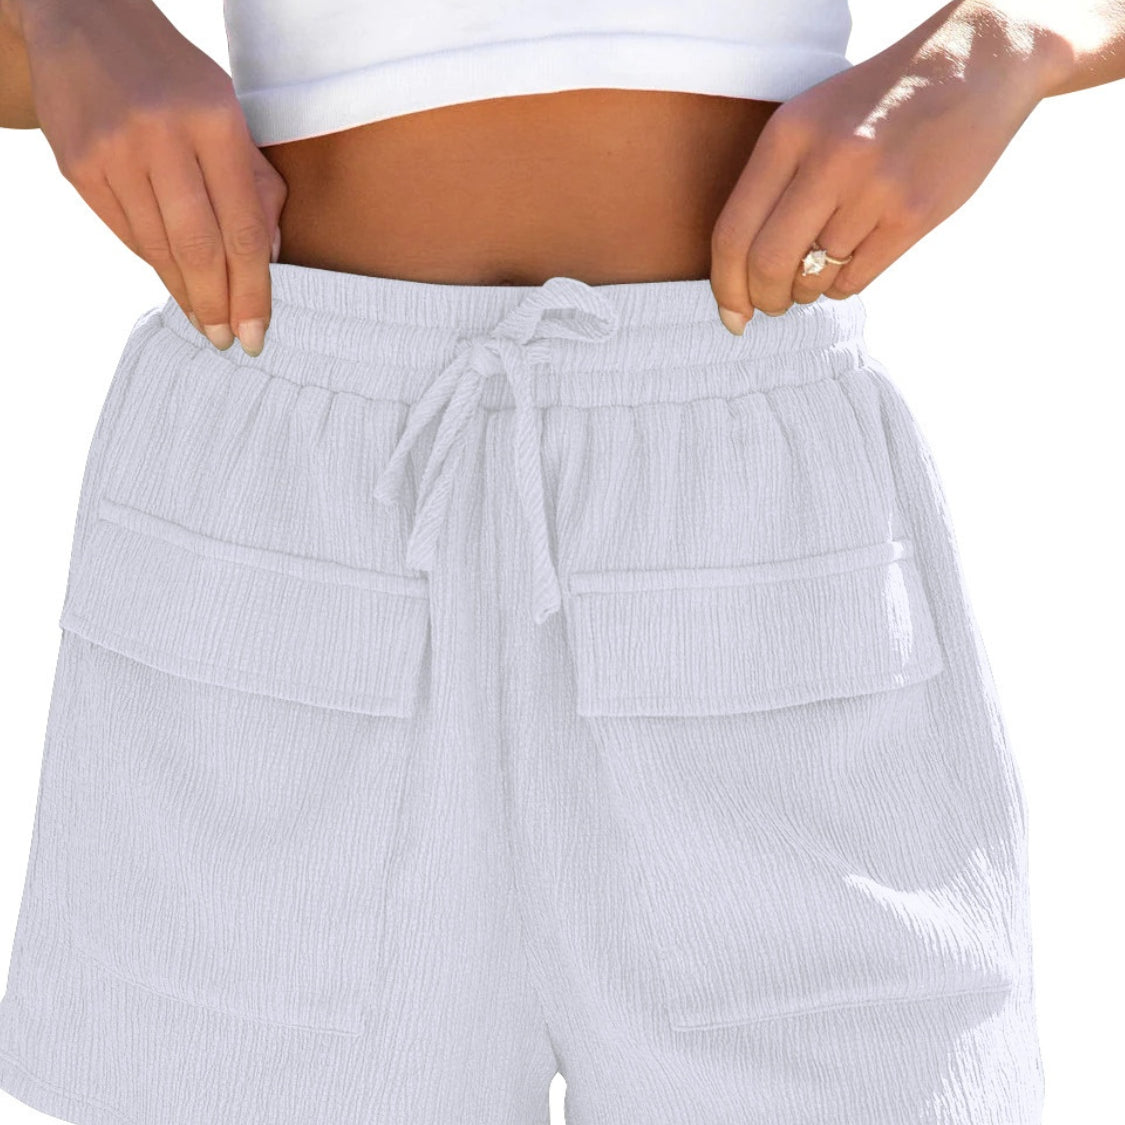 Drawstring High Waist Shorts with Pockets